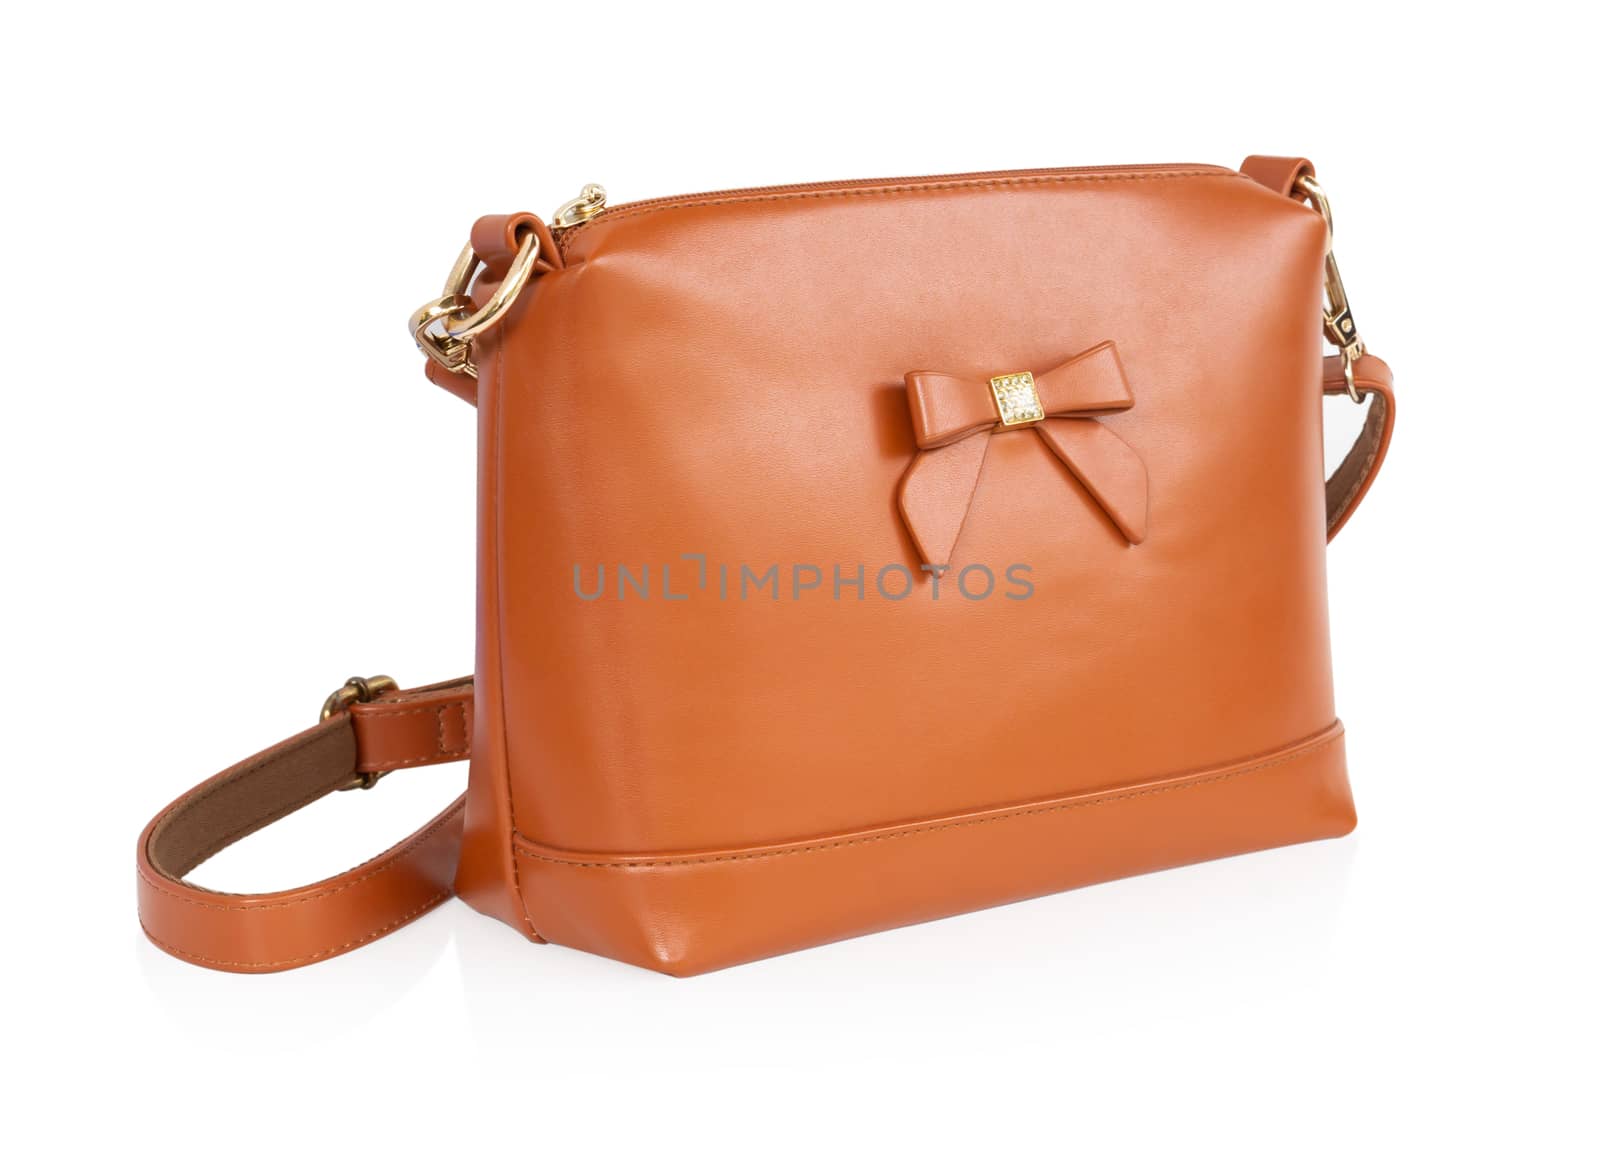 Closeup orange leather bag on white background by pt.pongsak@gmail.com